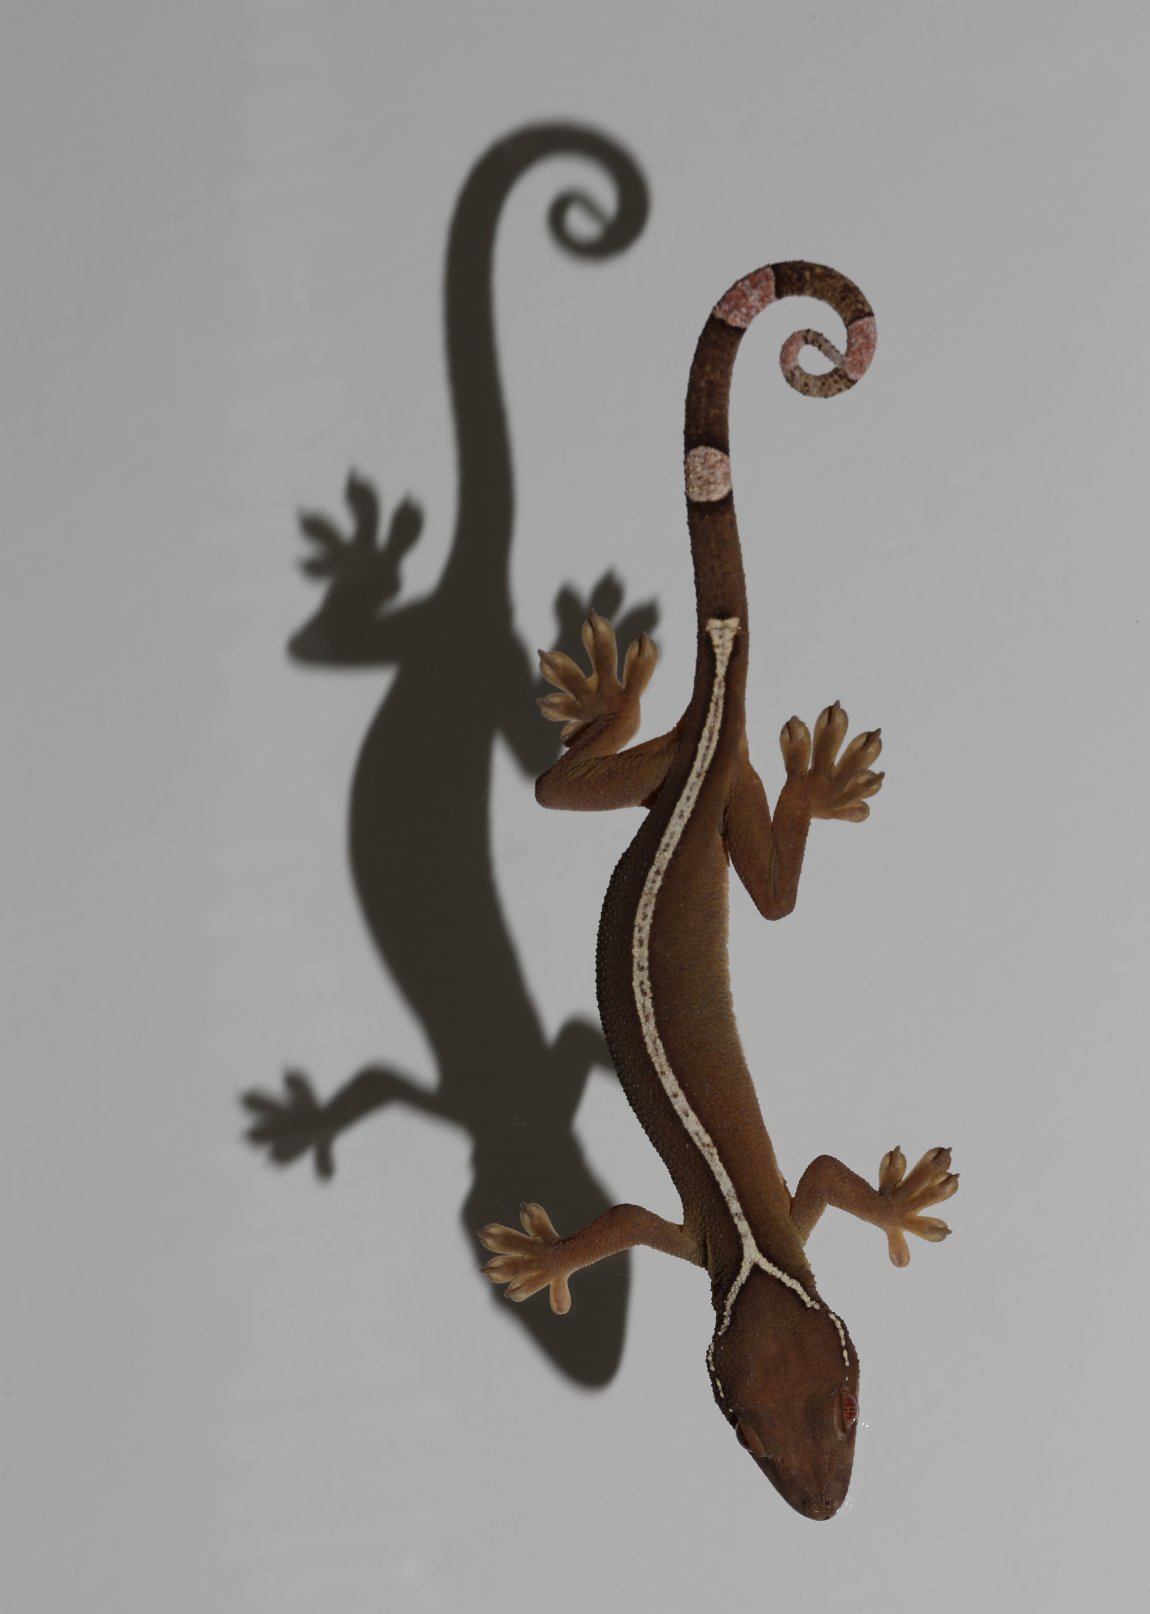 One-lined gecko (Gecko vittatus). Image credit: Sean Werle